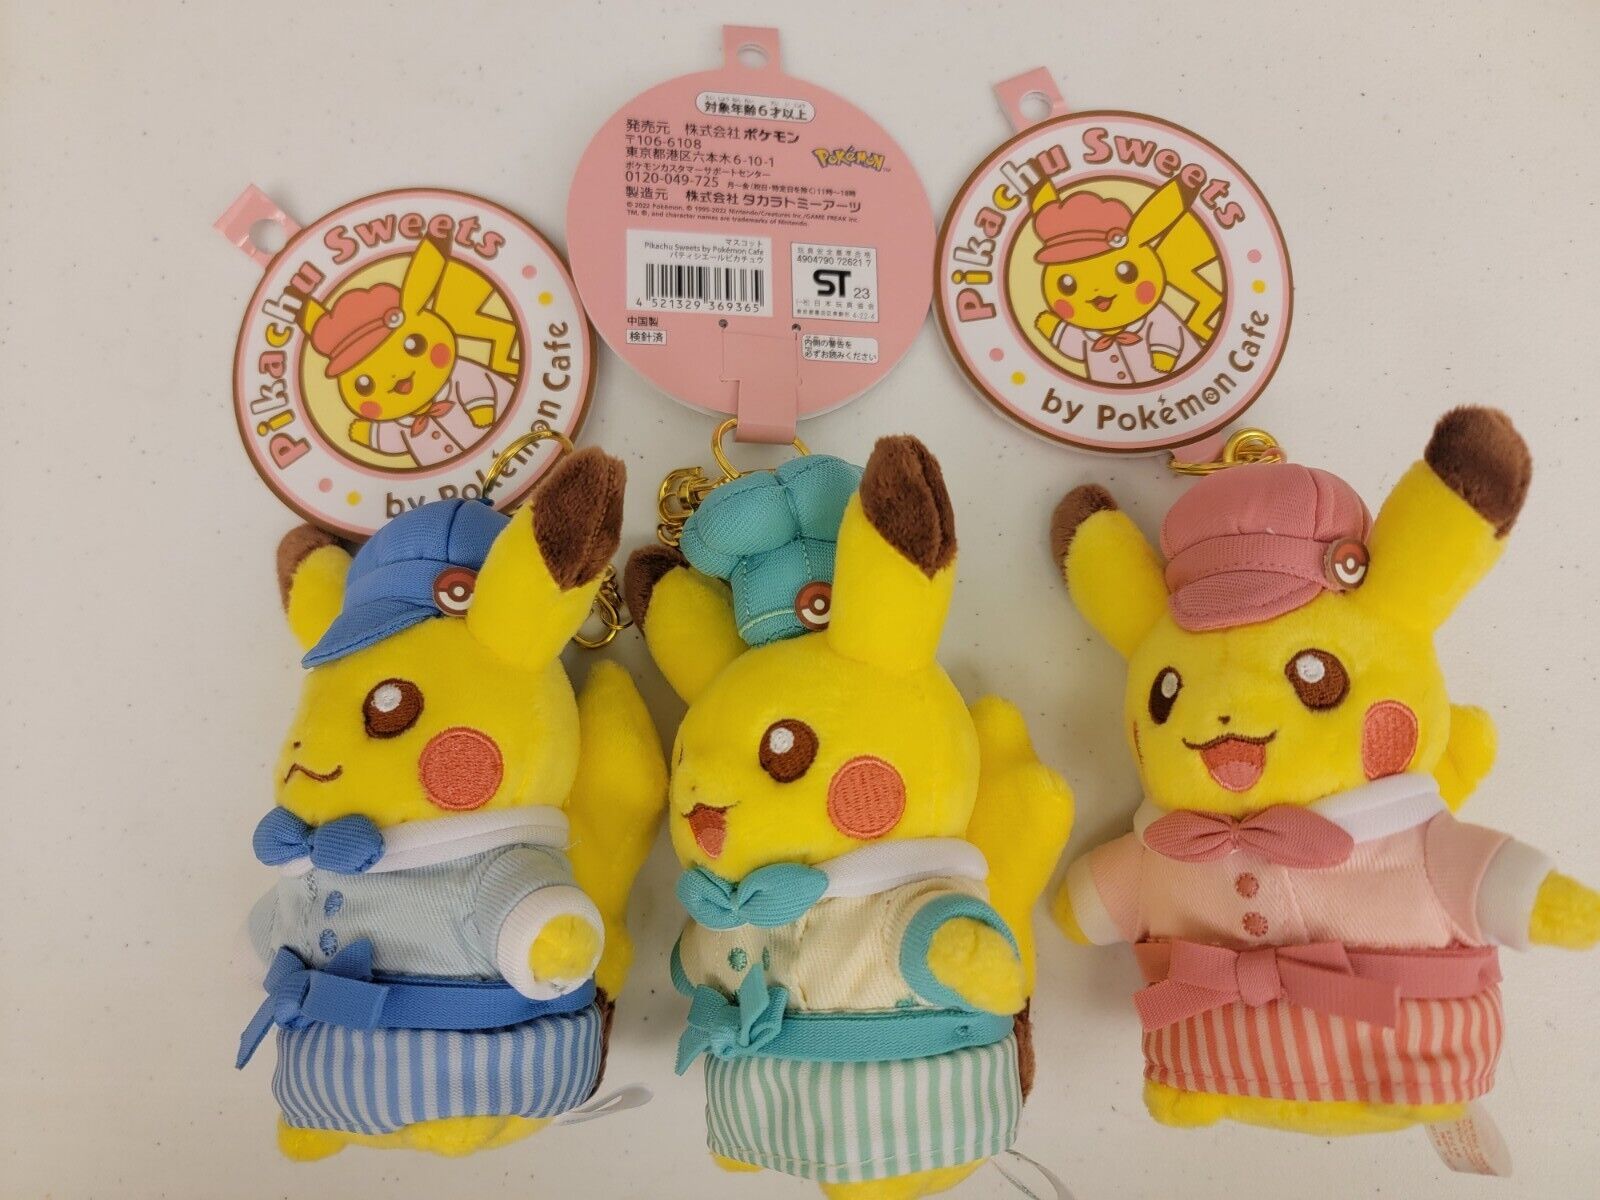 NWT Pikachu Plush Pikachu Sweets by Pokemon Cafe Limited Set Of 3 Pokemon NEW